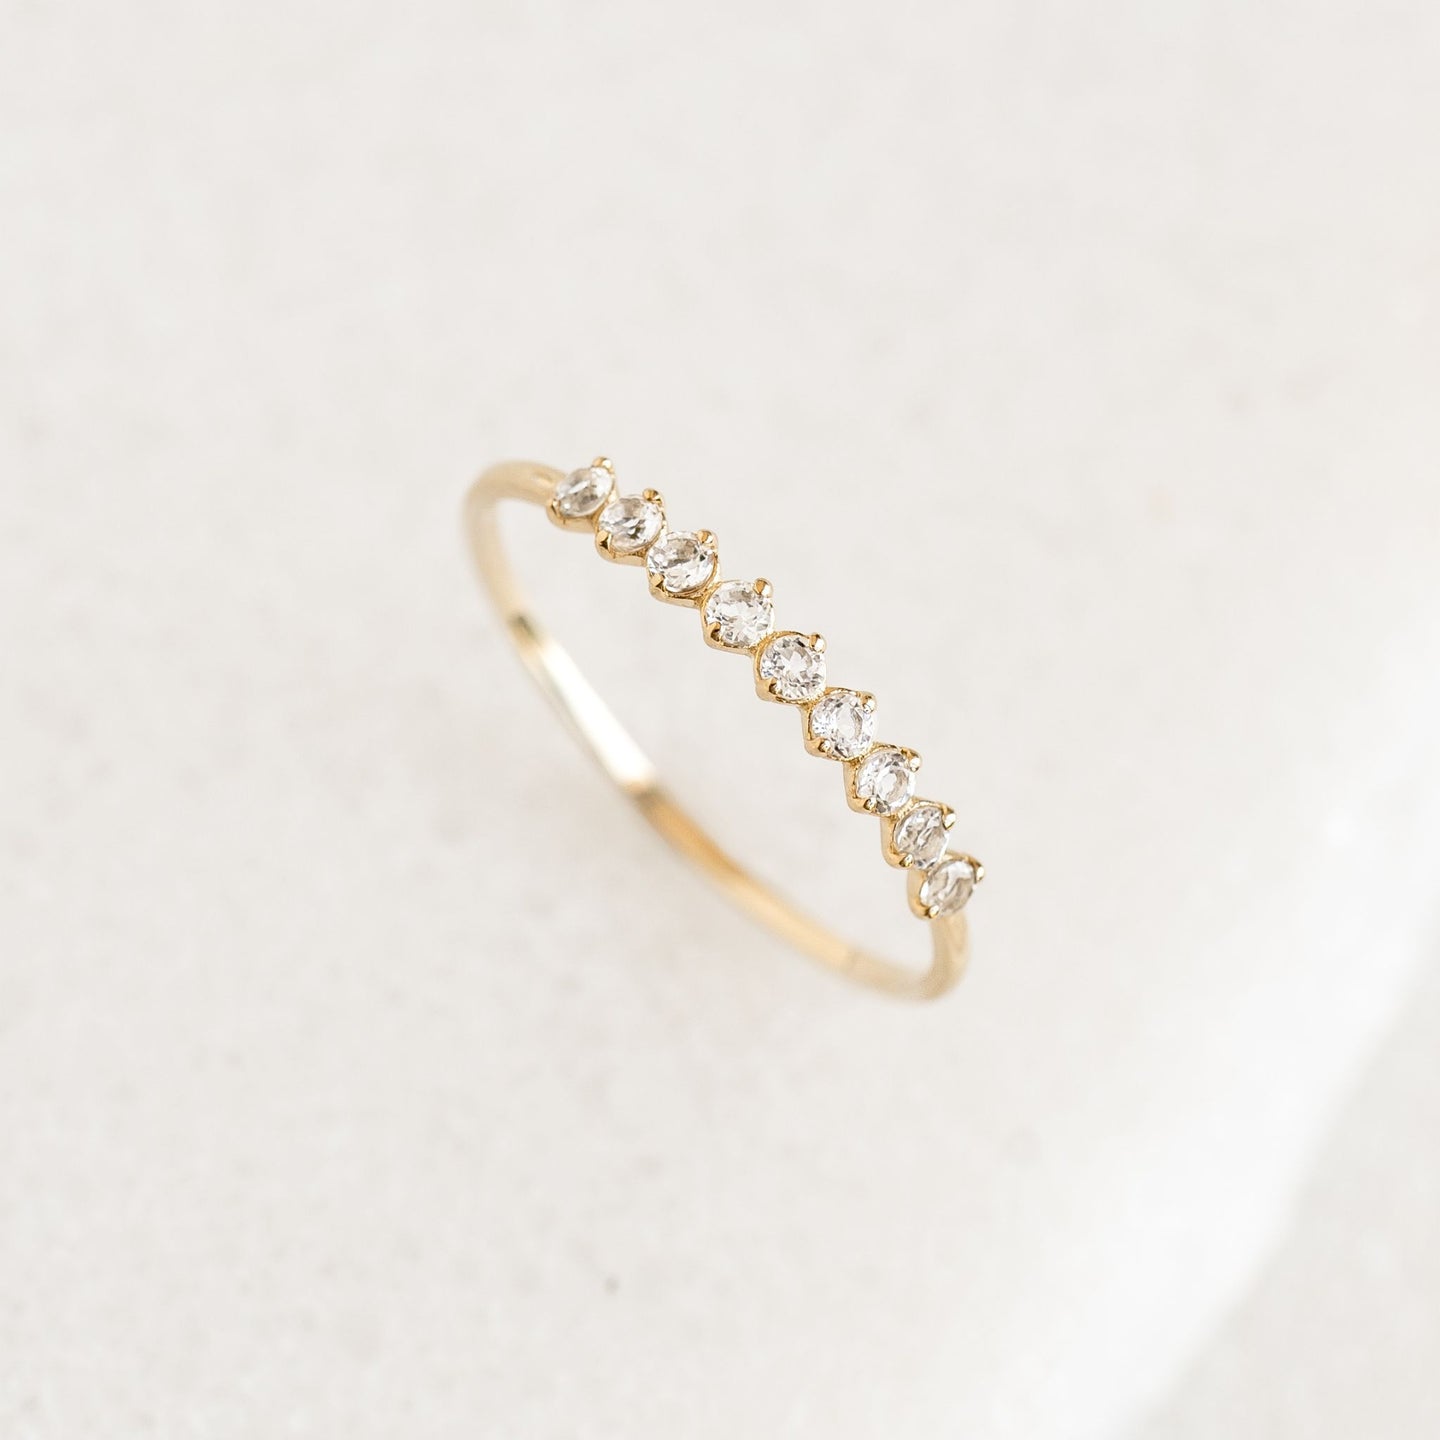 April Birthstone Ring 14k Gold - White Topaz